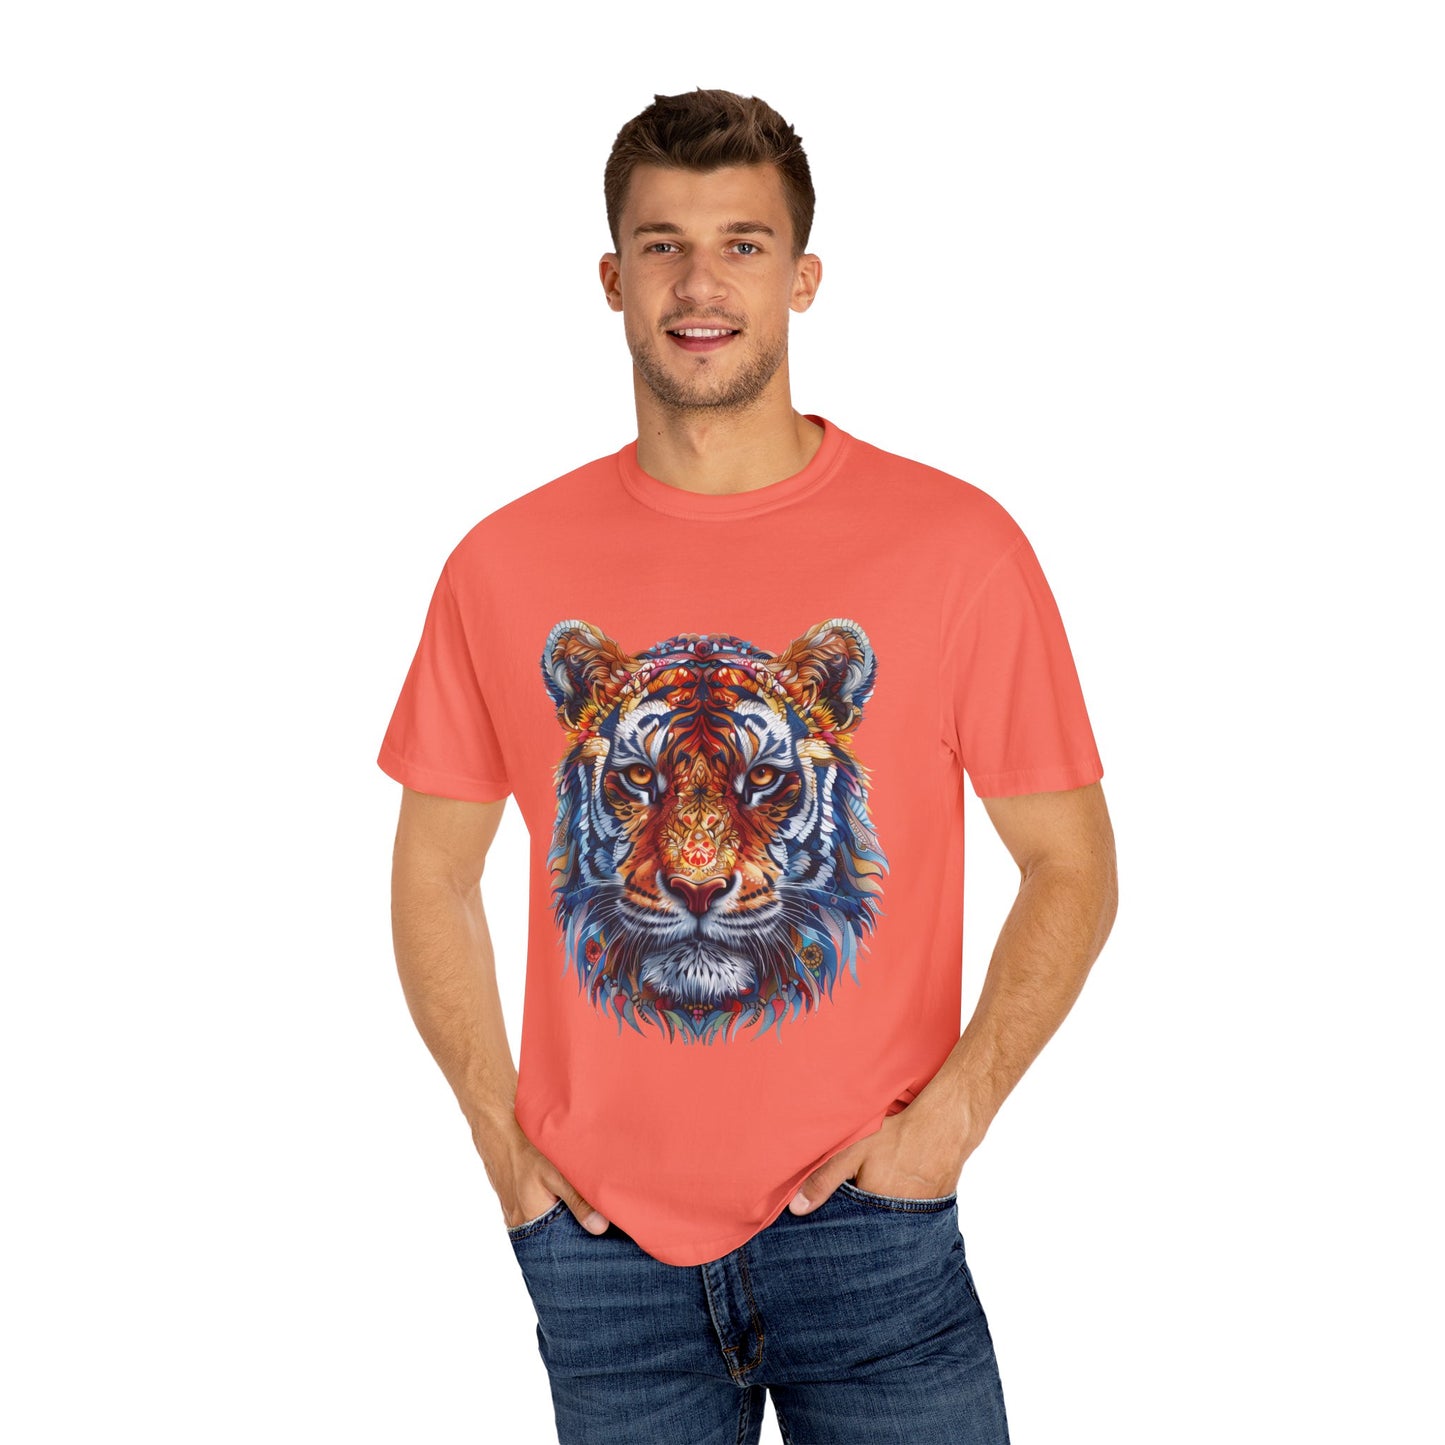 Lion Head Cool Graphic Design Novelty Unisex Garment-dyed T-shirt Cotton Funny Humorous Graphic Soft Premium Unisex Men Women Bright Salmon T-shirt Birthday Gift-33